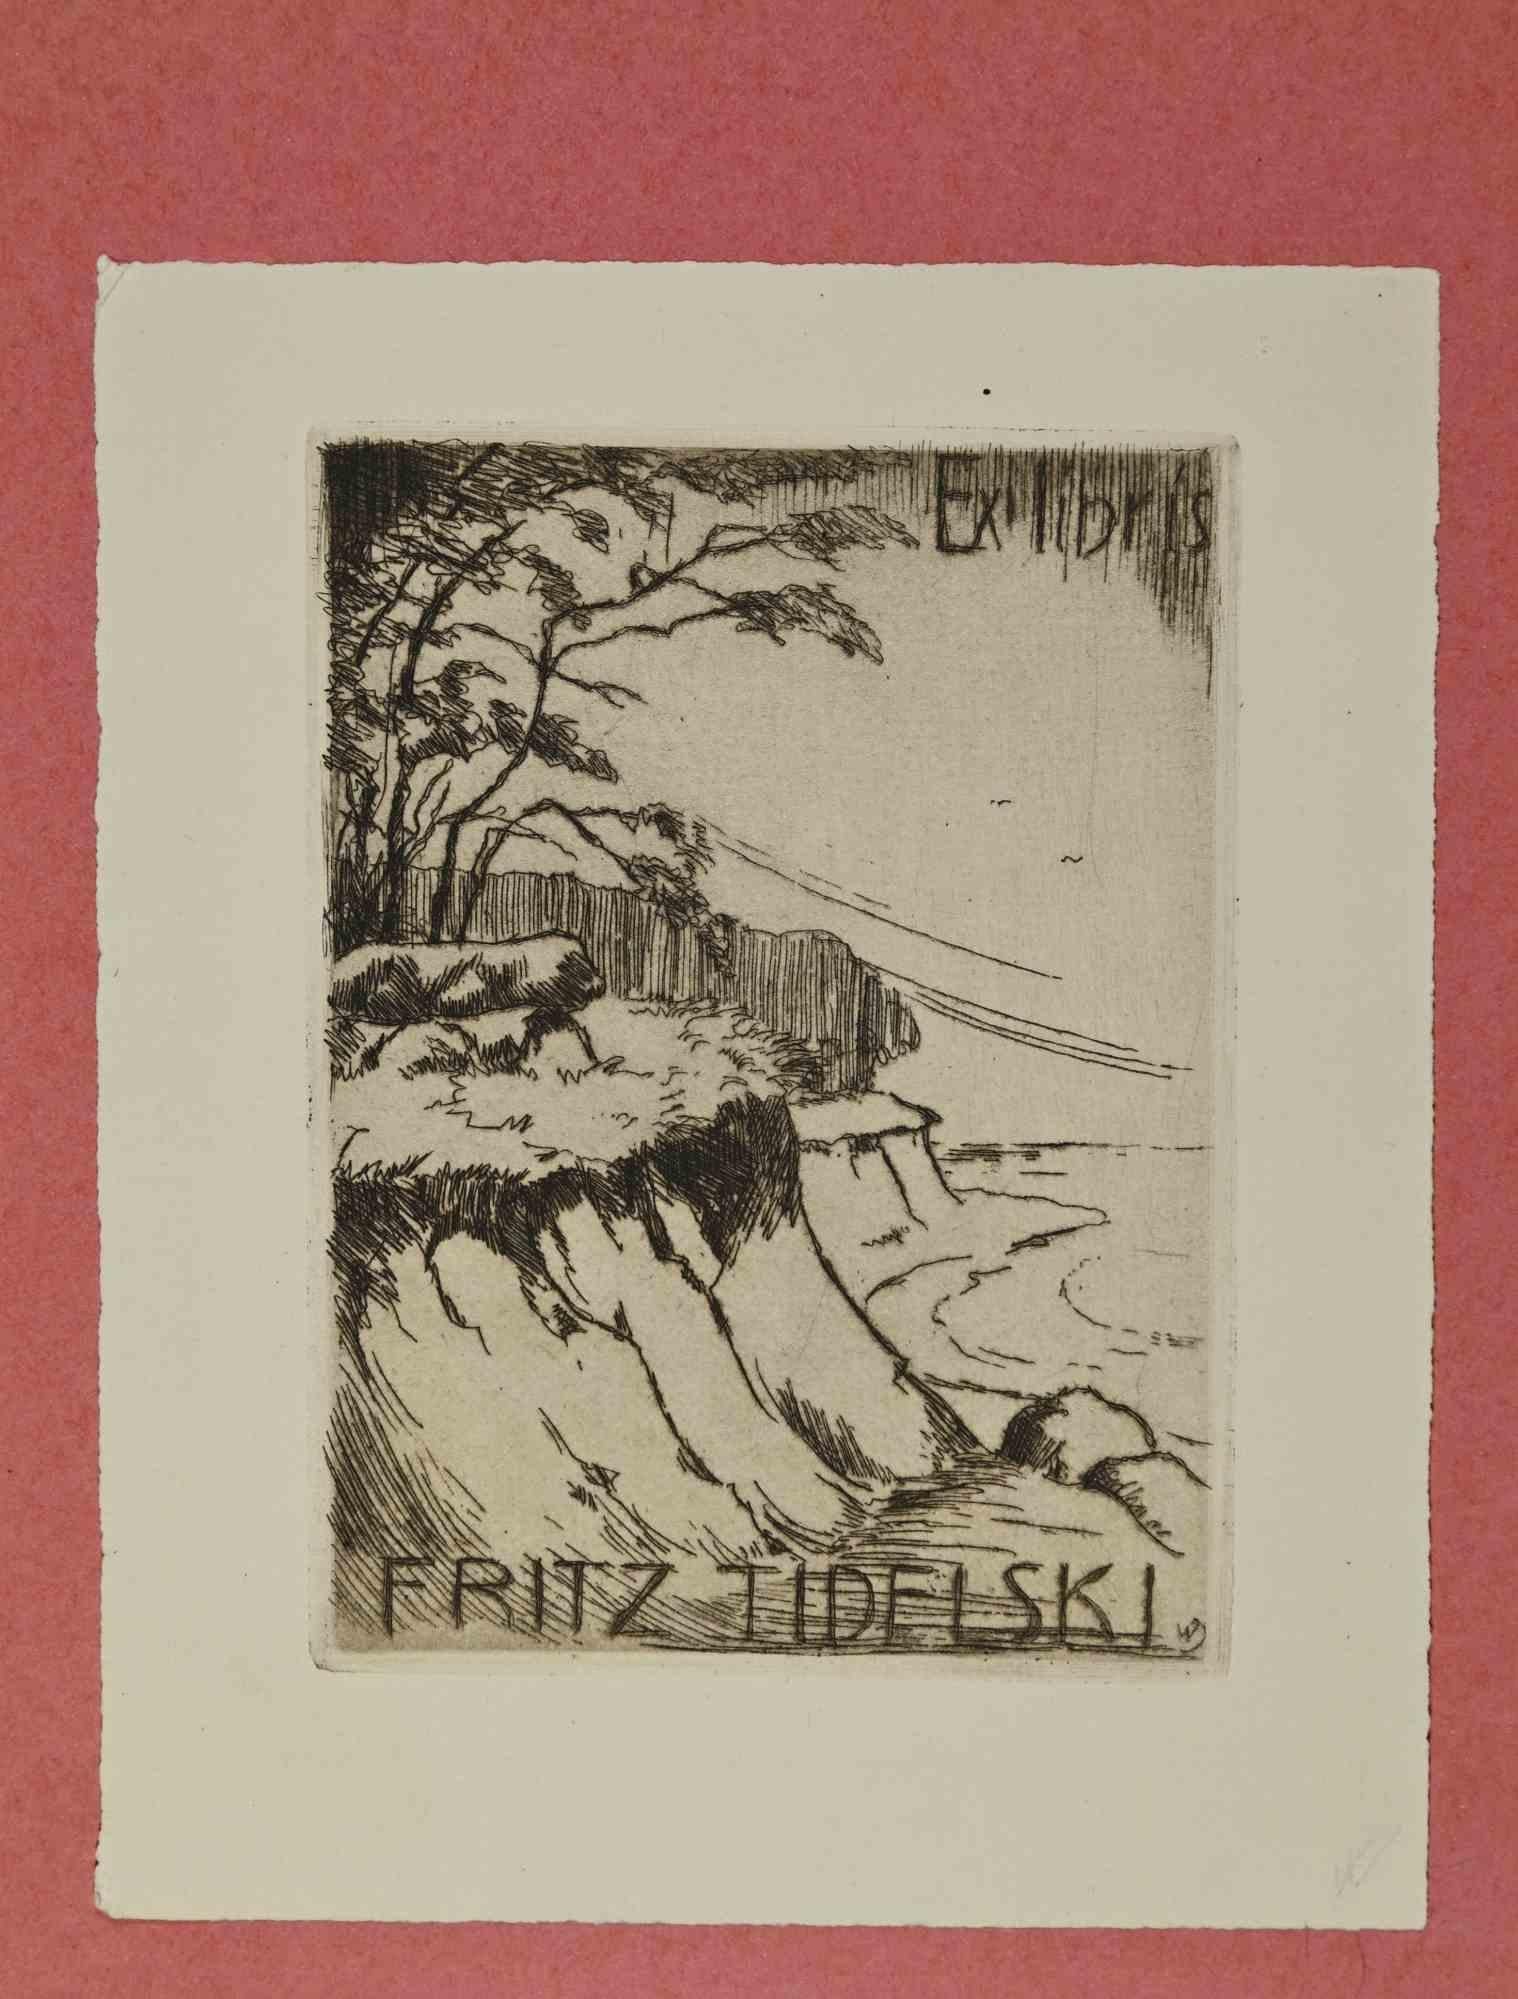 Unknown Figurative Print - Ex-Libris  - Fritz Tidelski - Etching - Mid 20th Century